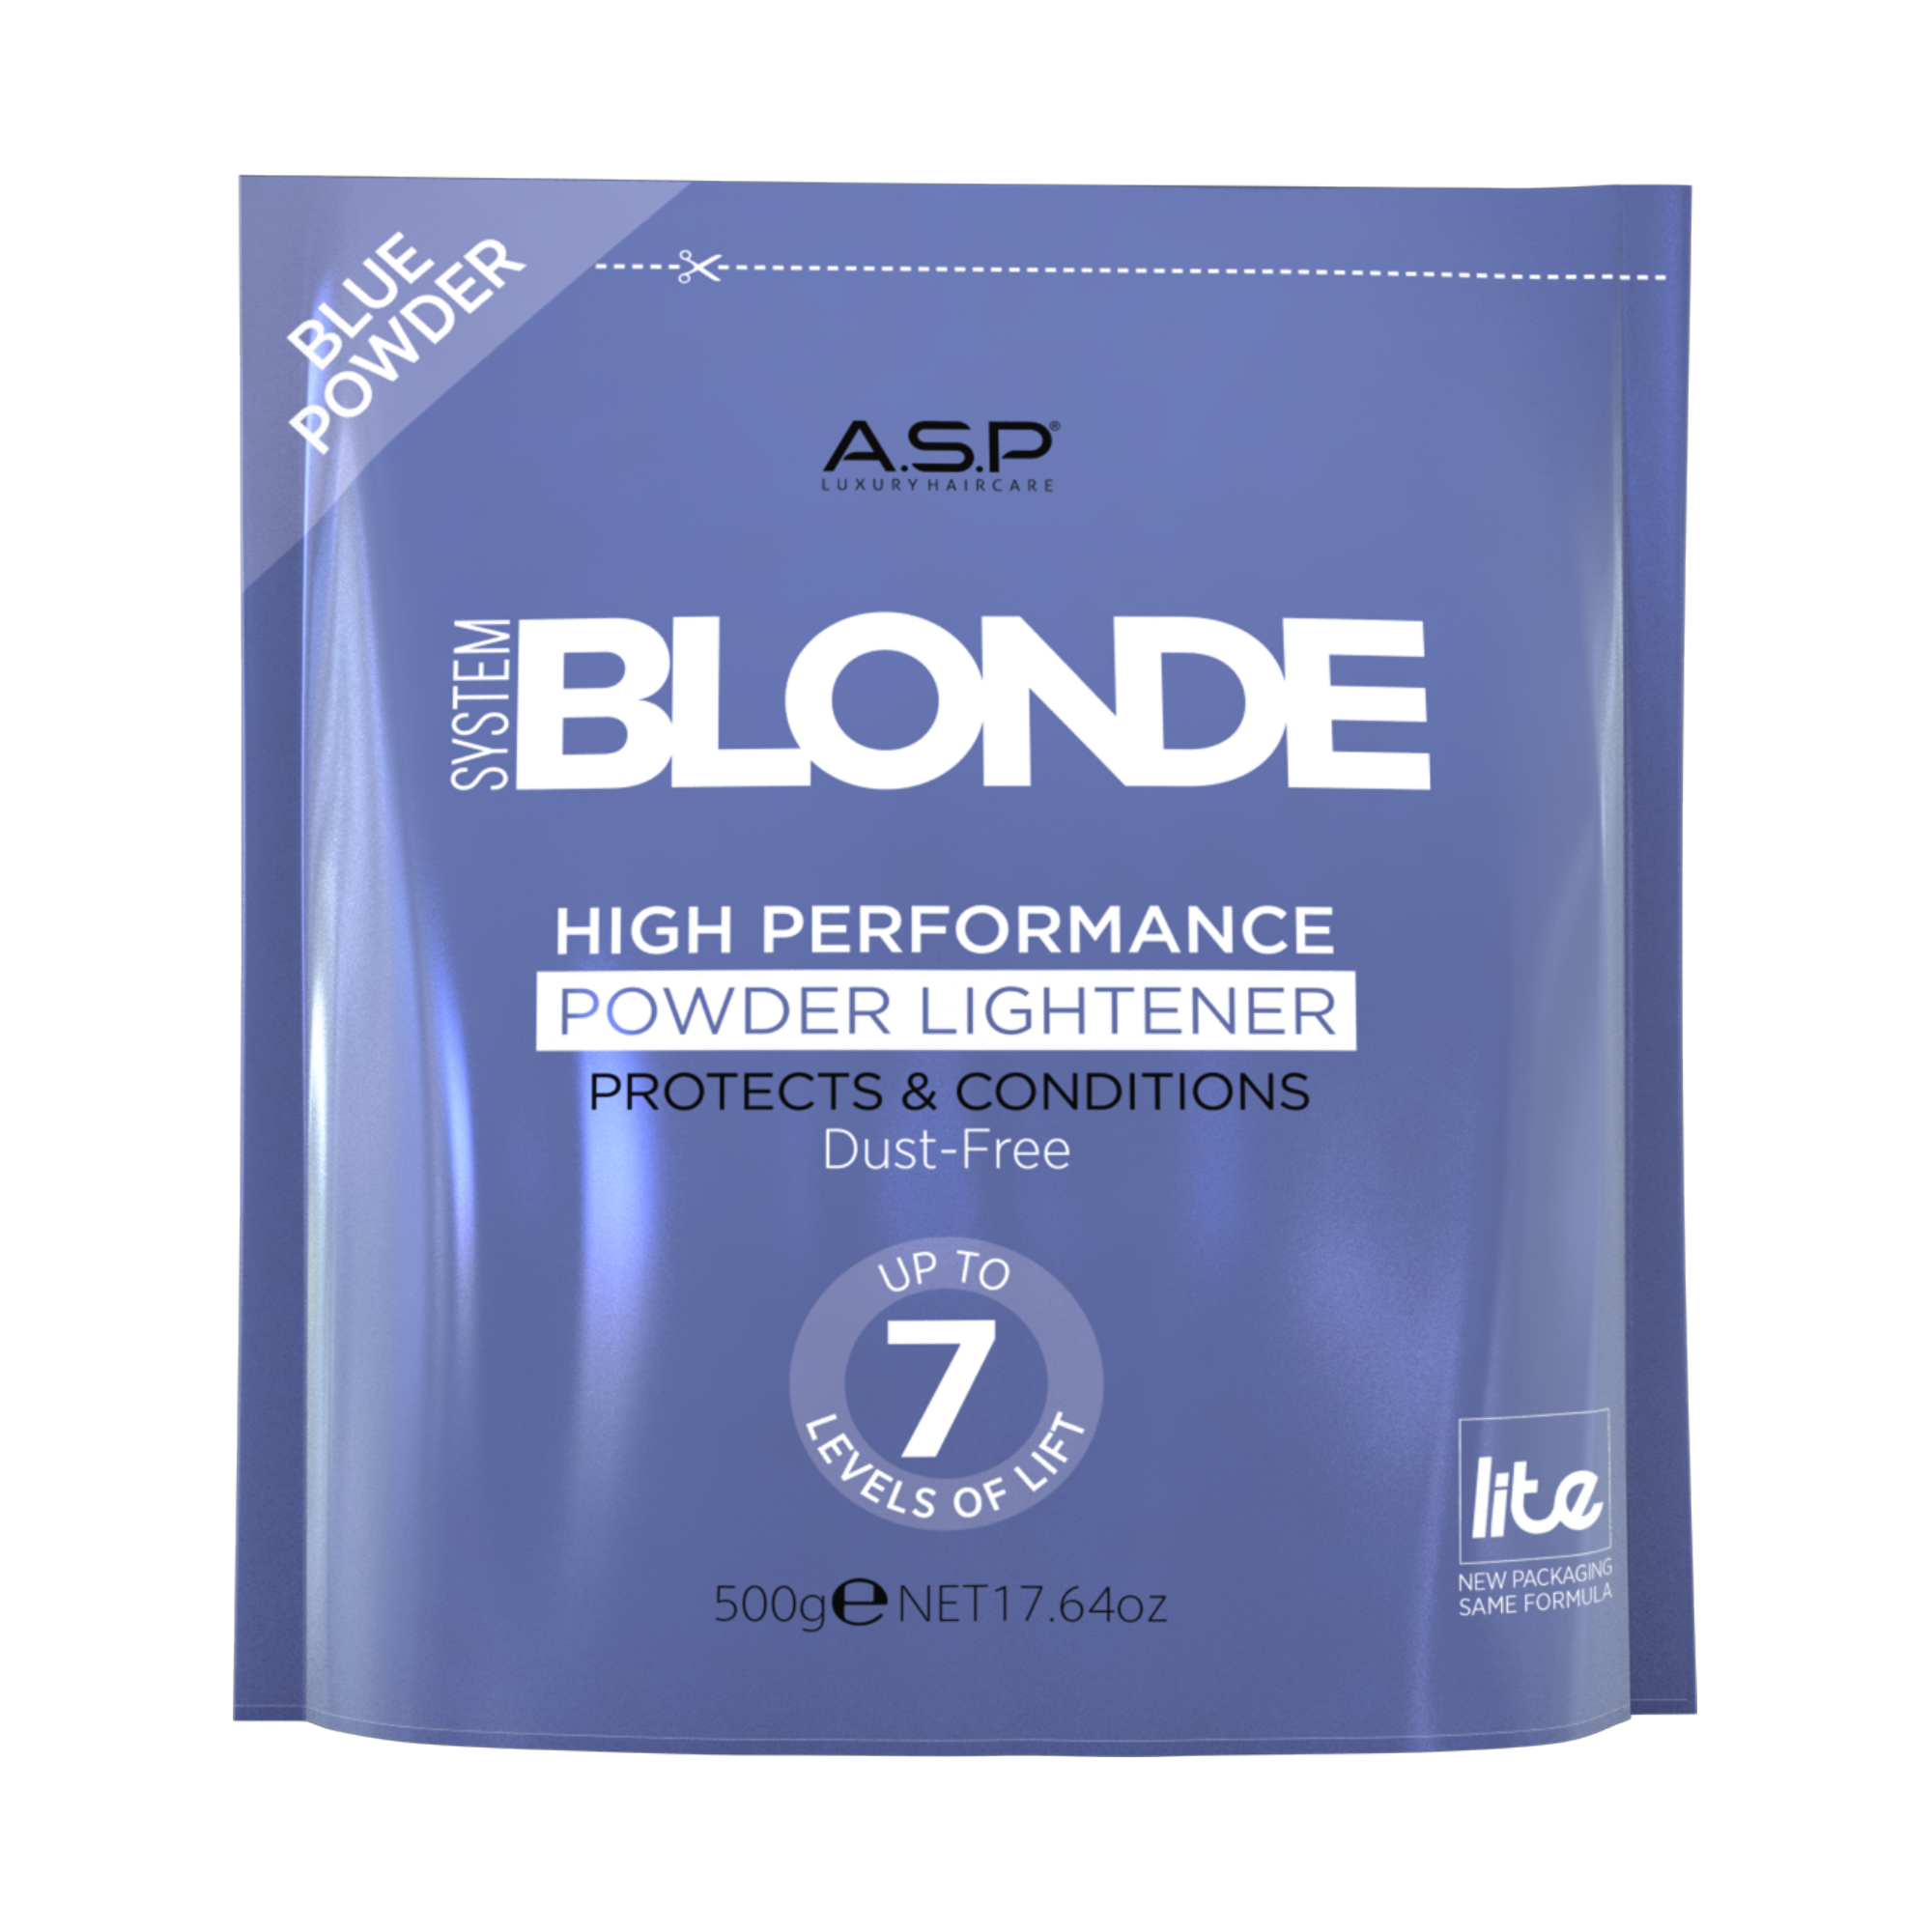 ASP System Blonde Powder Lightener 7 Lift Dust Free